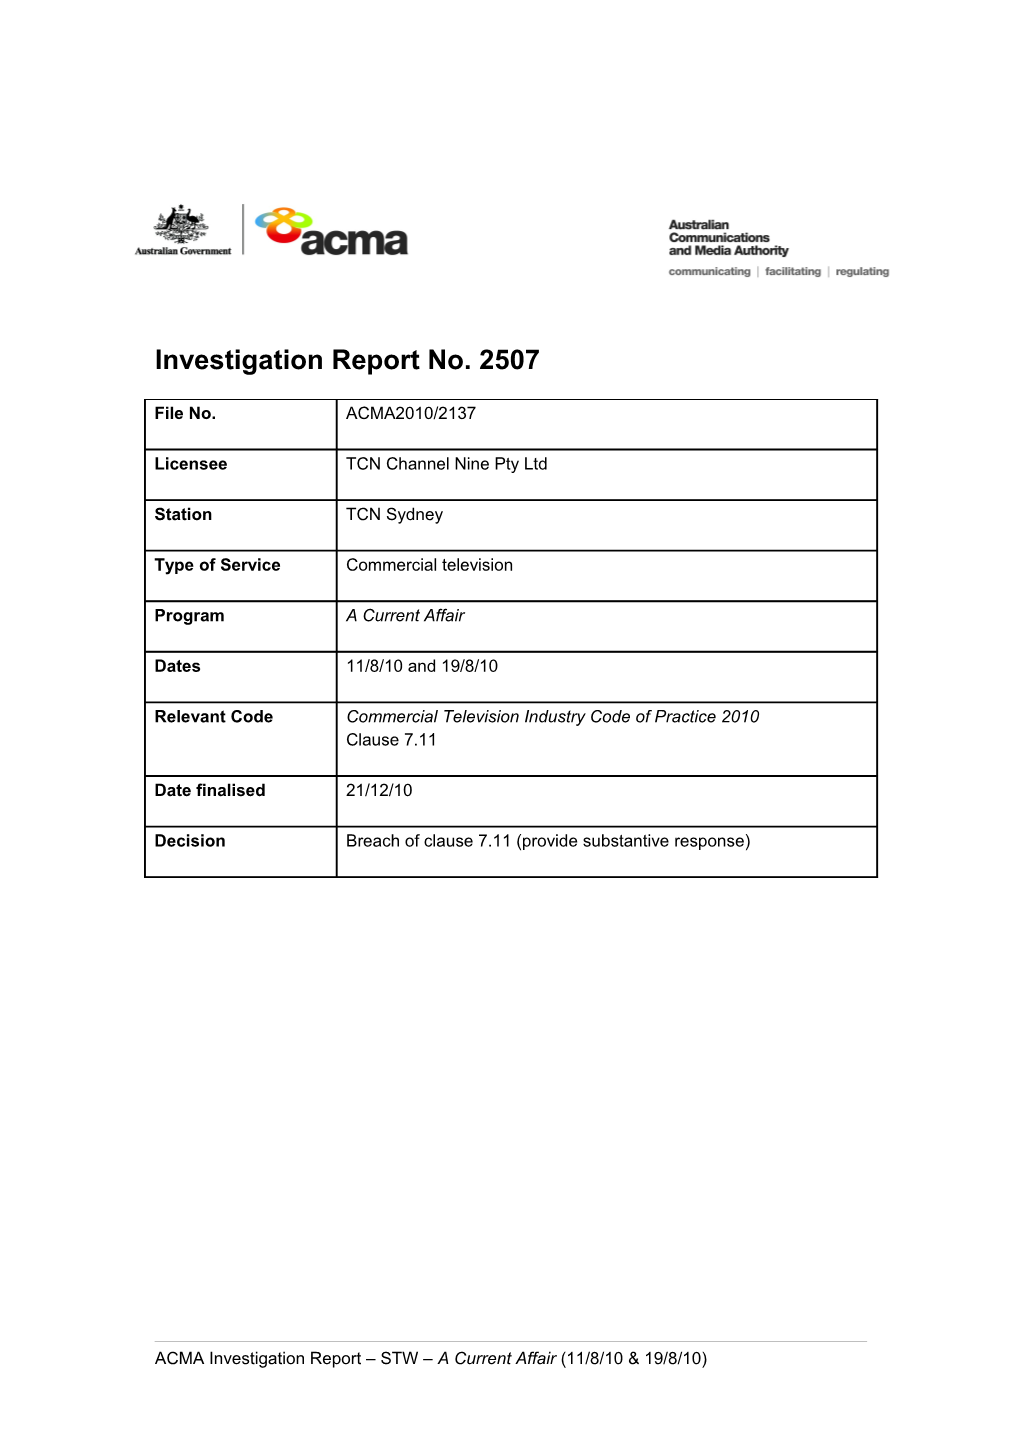 TCN 9 (Sydney) - ACMA Investigation Report 2507